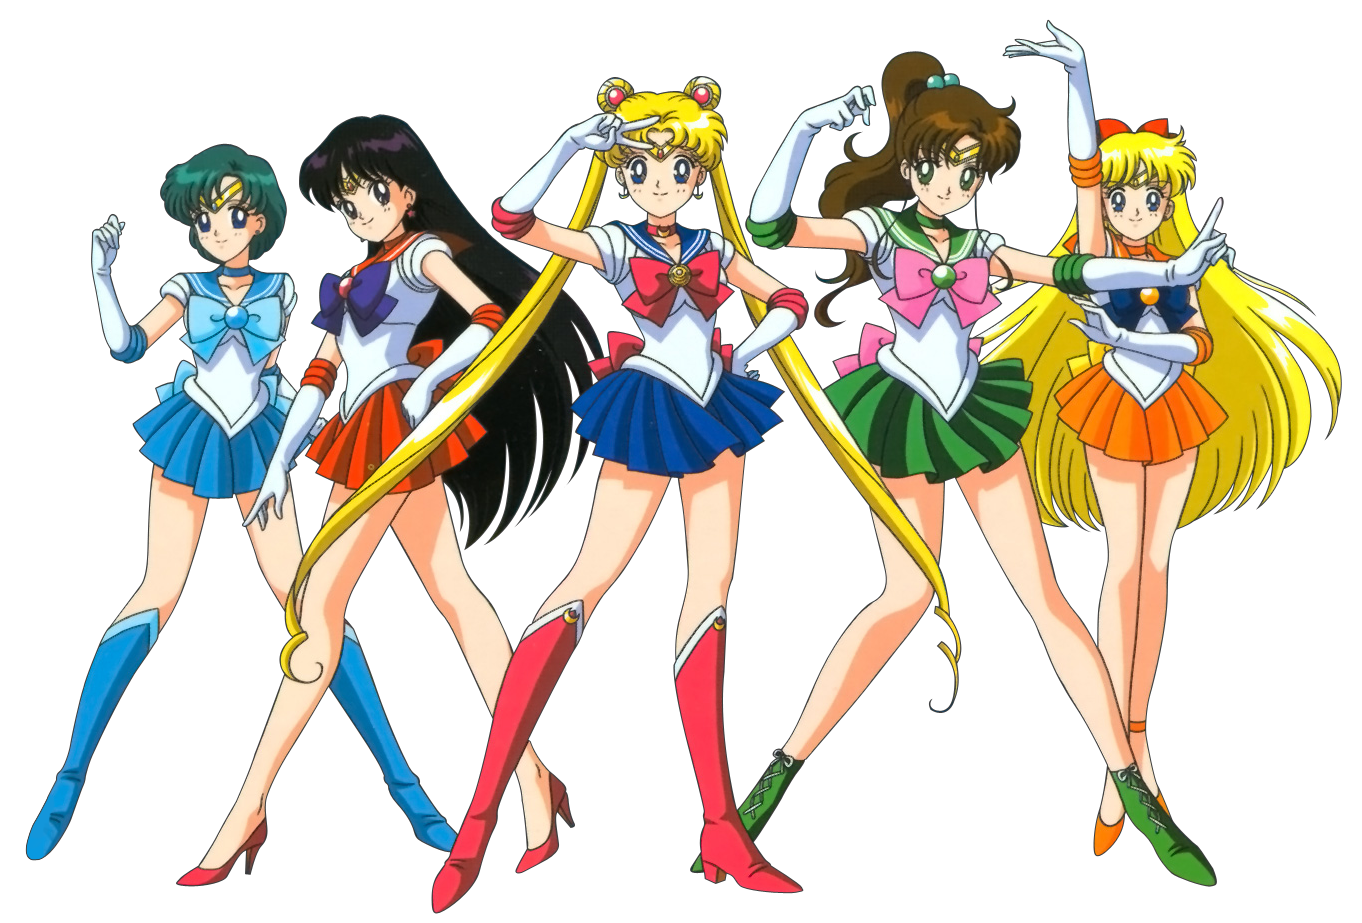 6. Sailor Mercury from Sailor Moon - wide 8